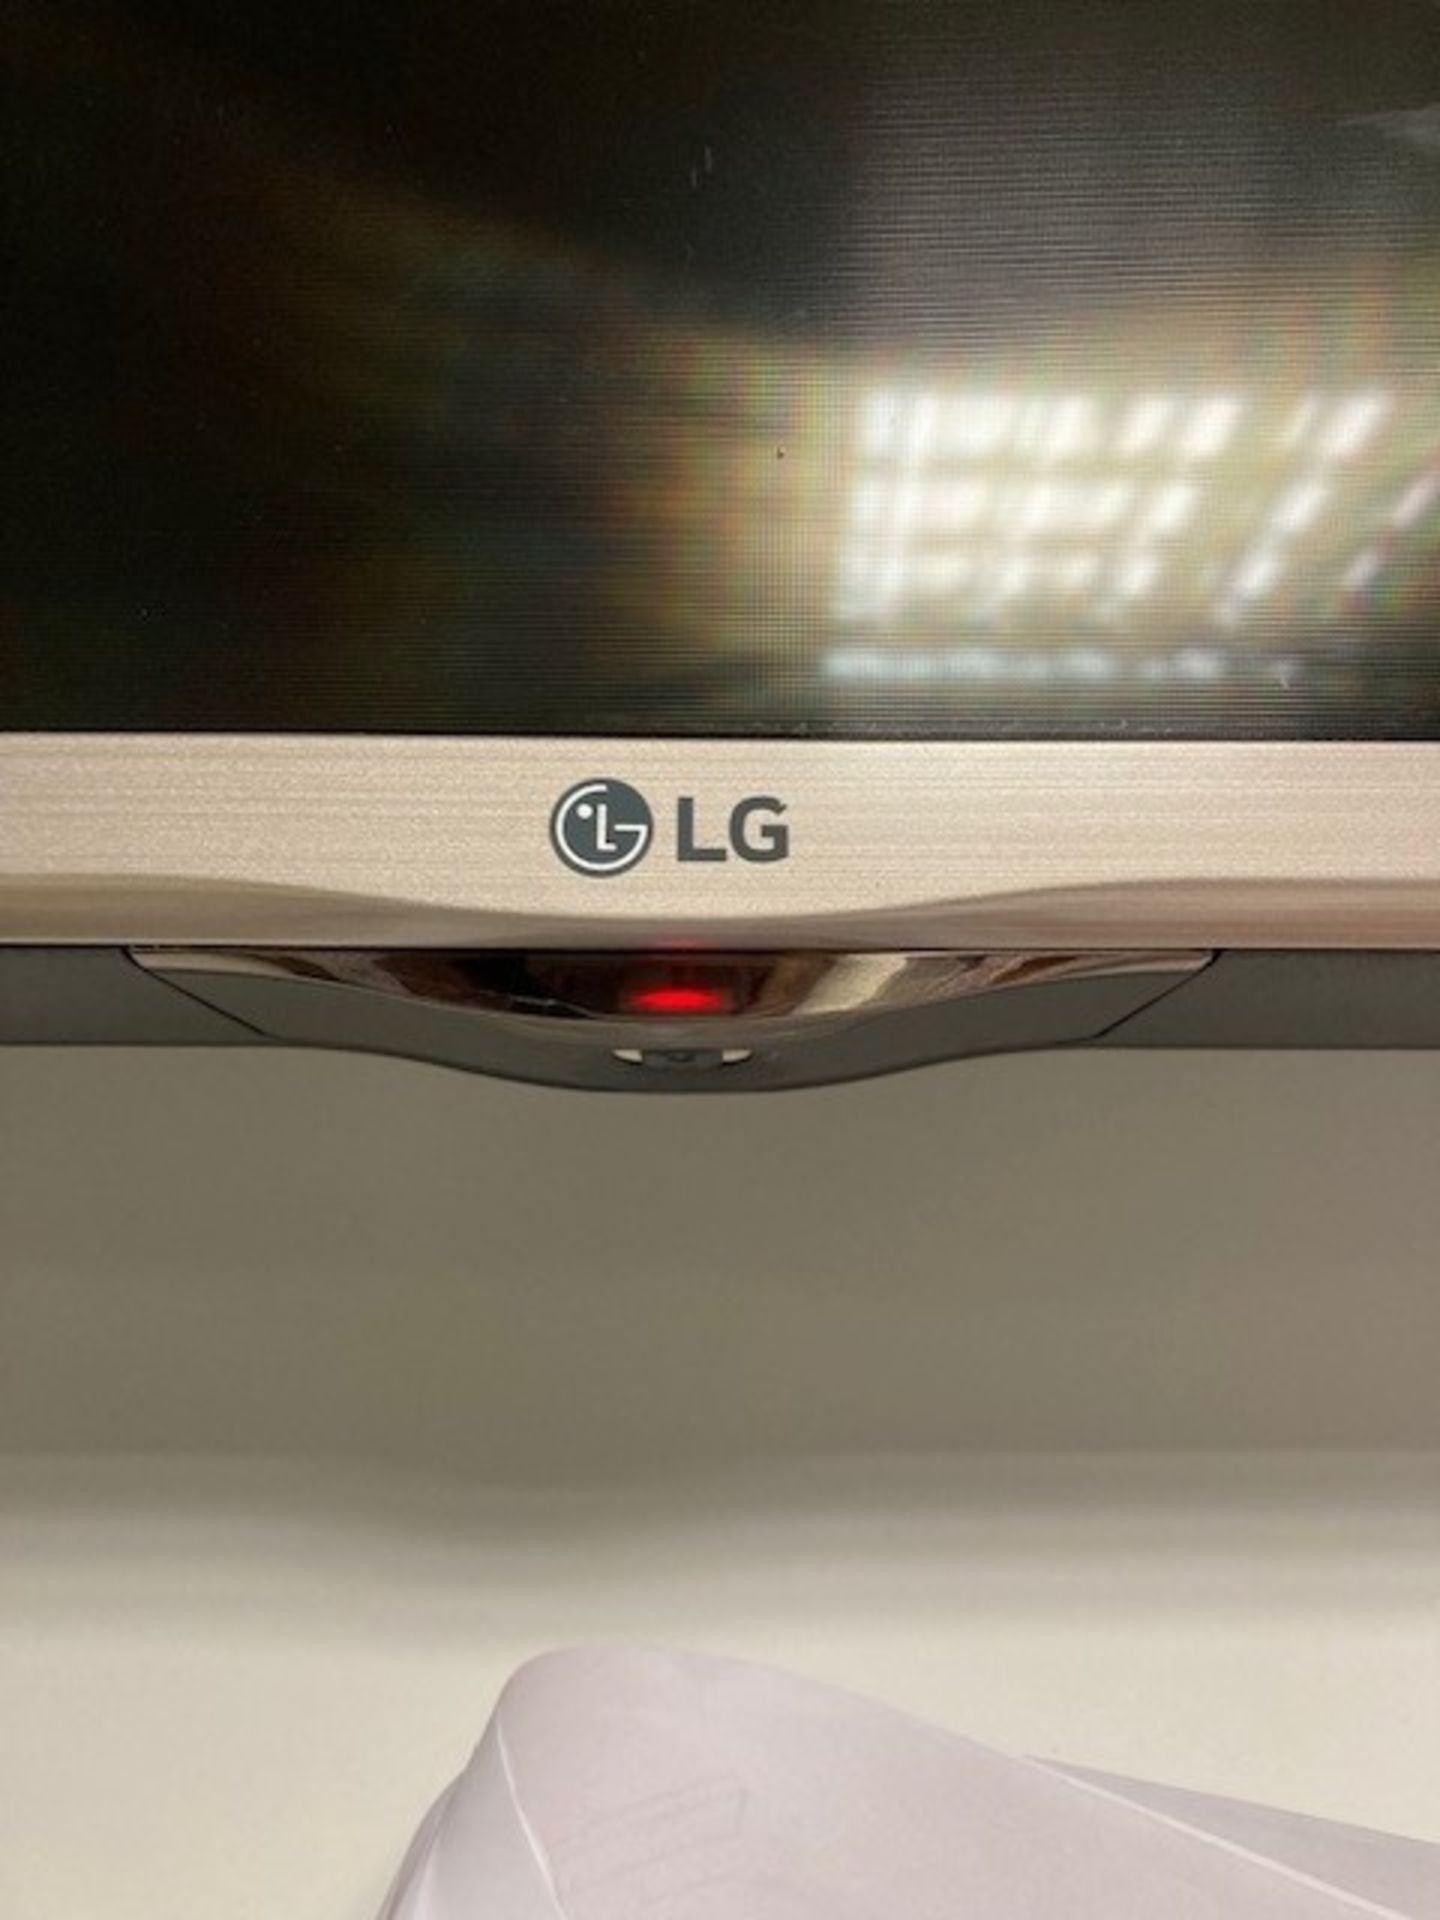 LG 50LF561V 50 Inch LED Television - Image 4 of 4